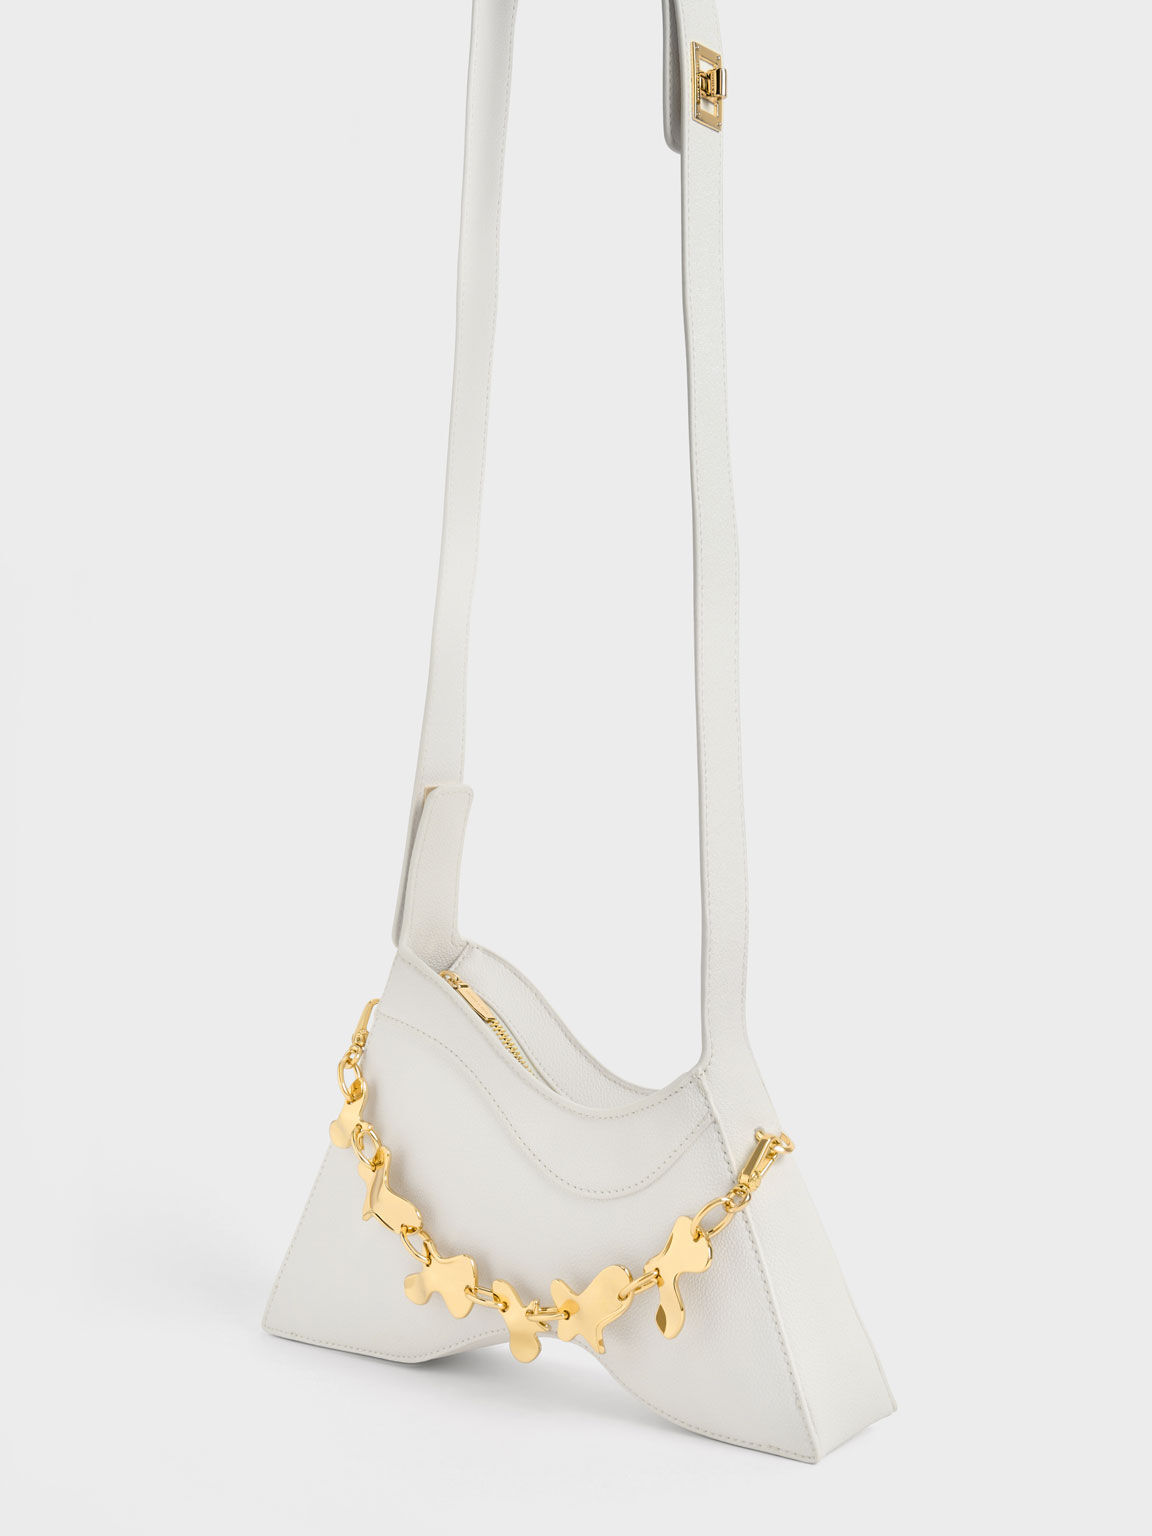 Verity Chain-Link Sculptural Bag, White, hi-res